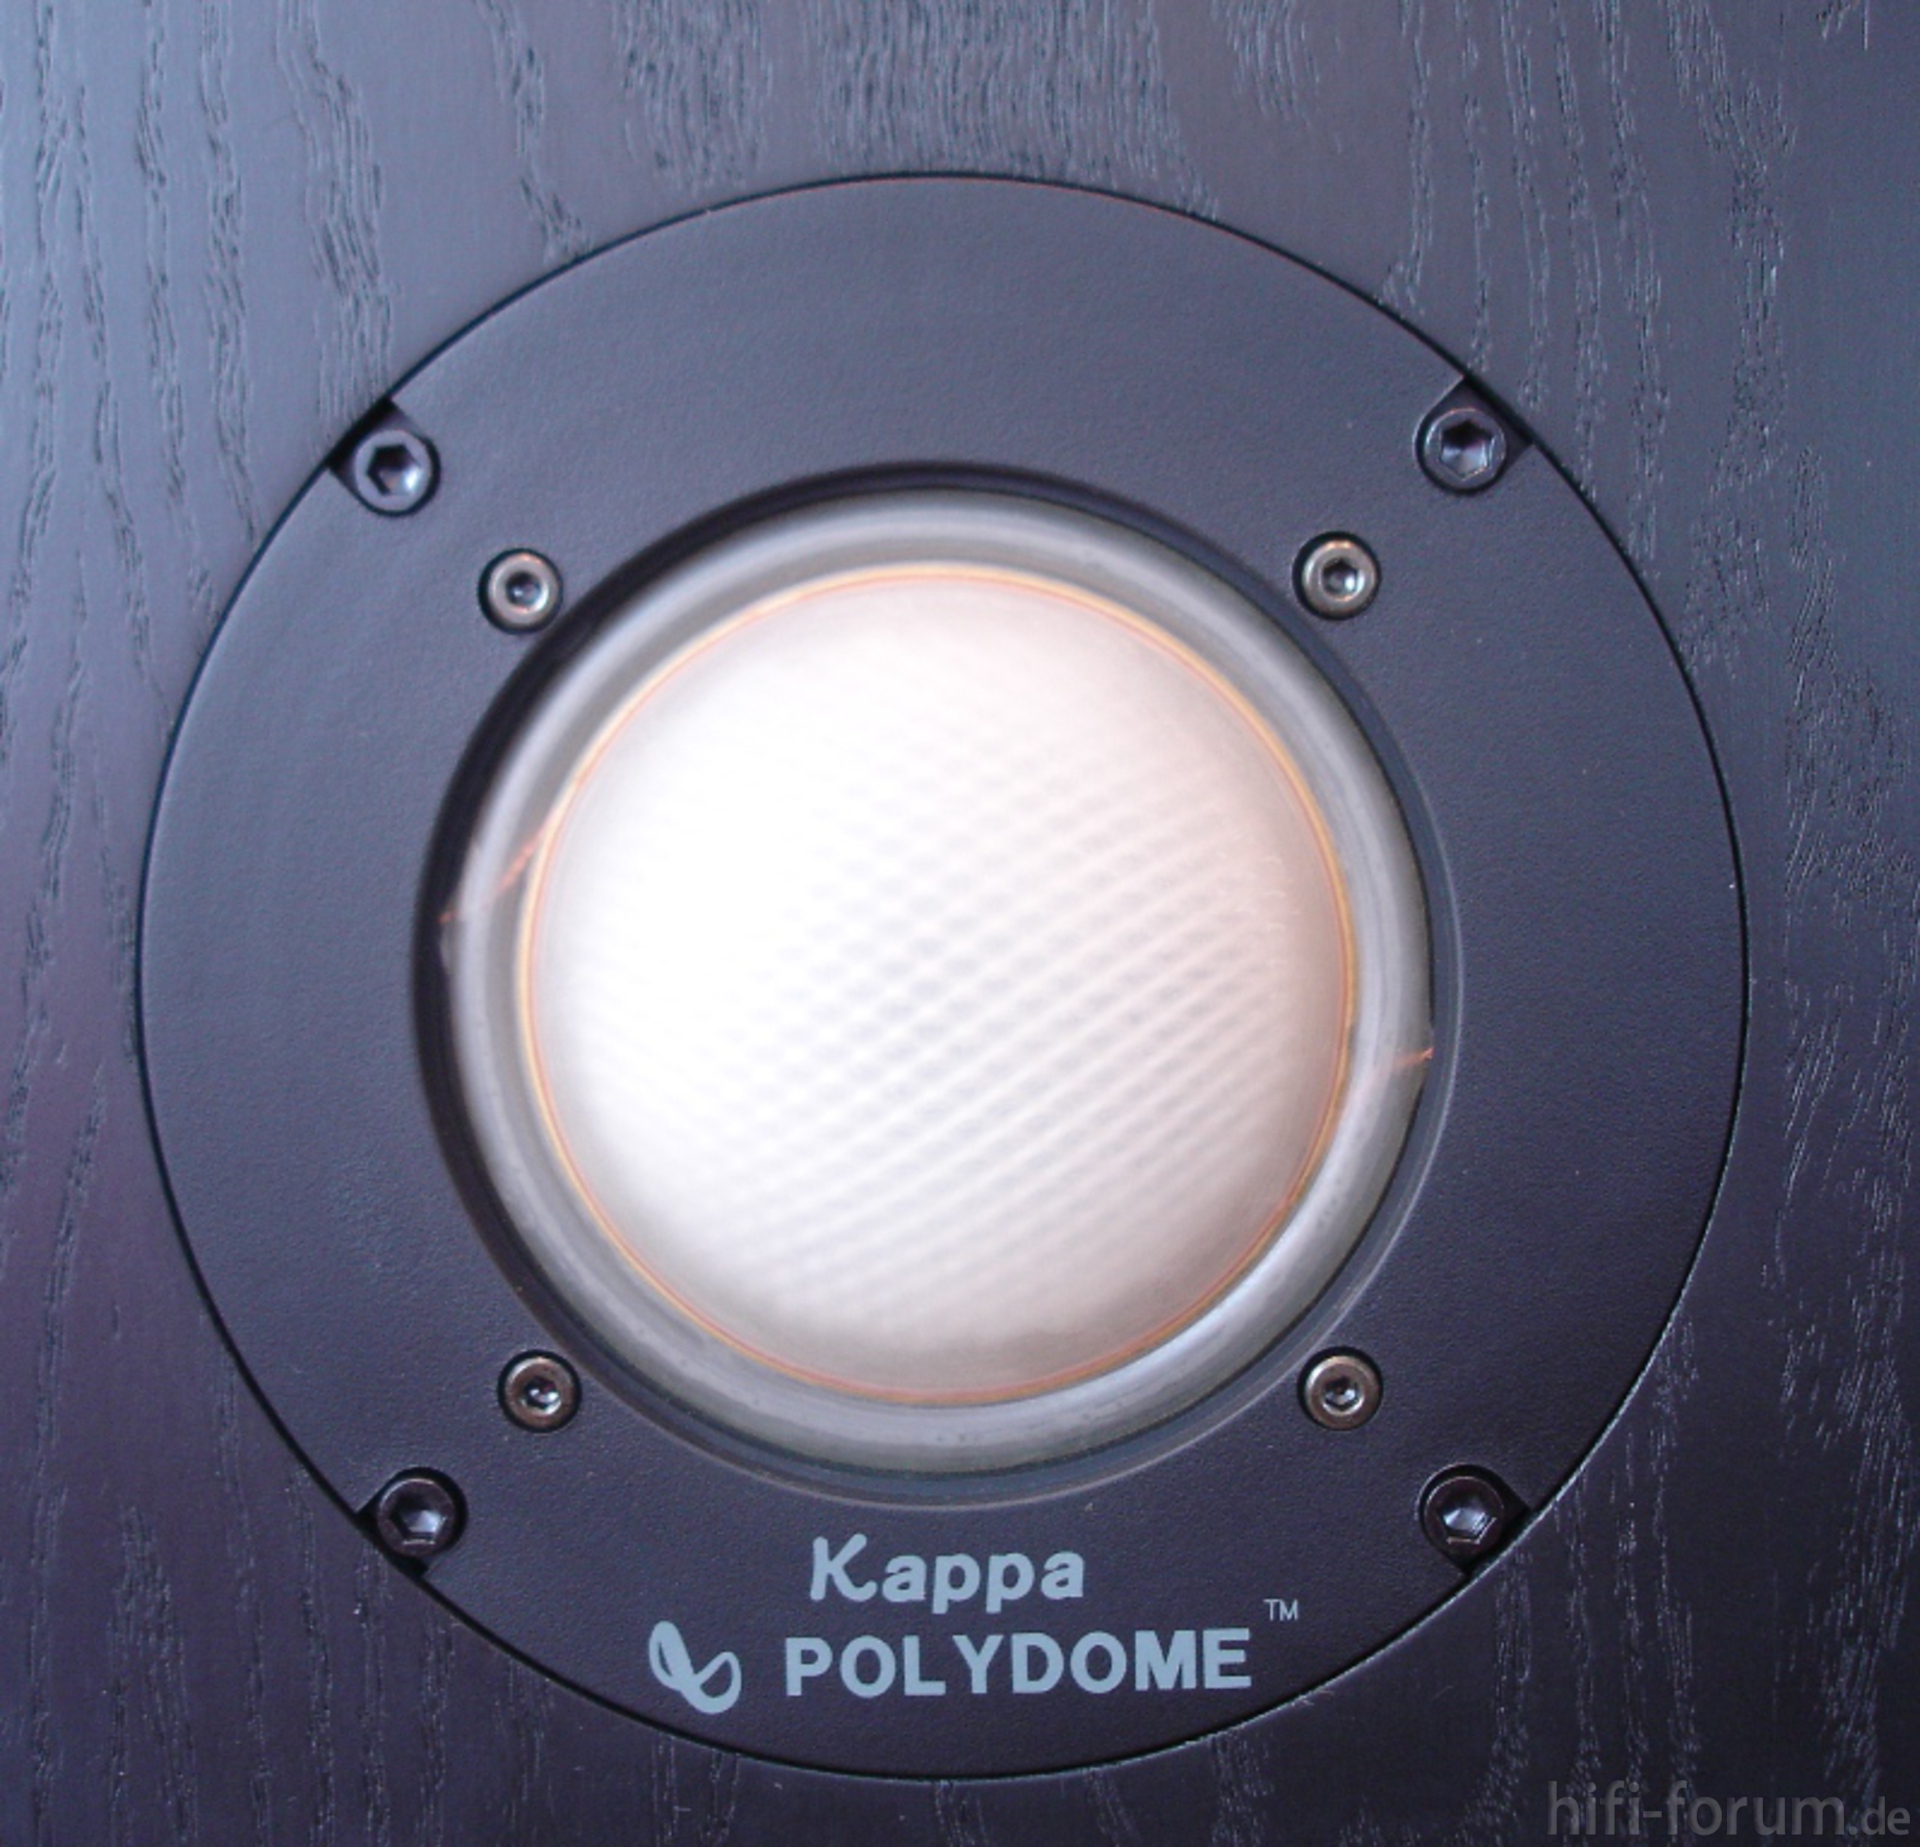 Infinity Kappa Polydome | anlage, stereo | hifi-forum.de Bildergalerie